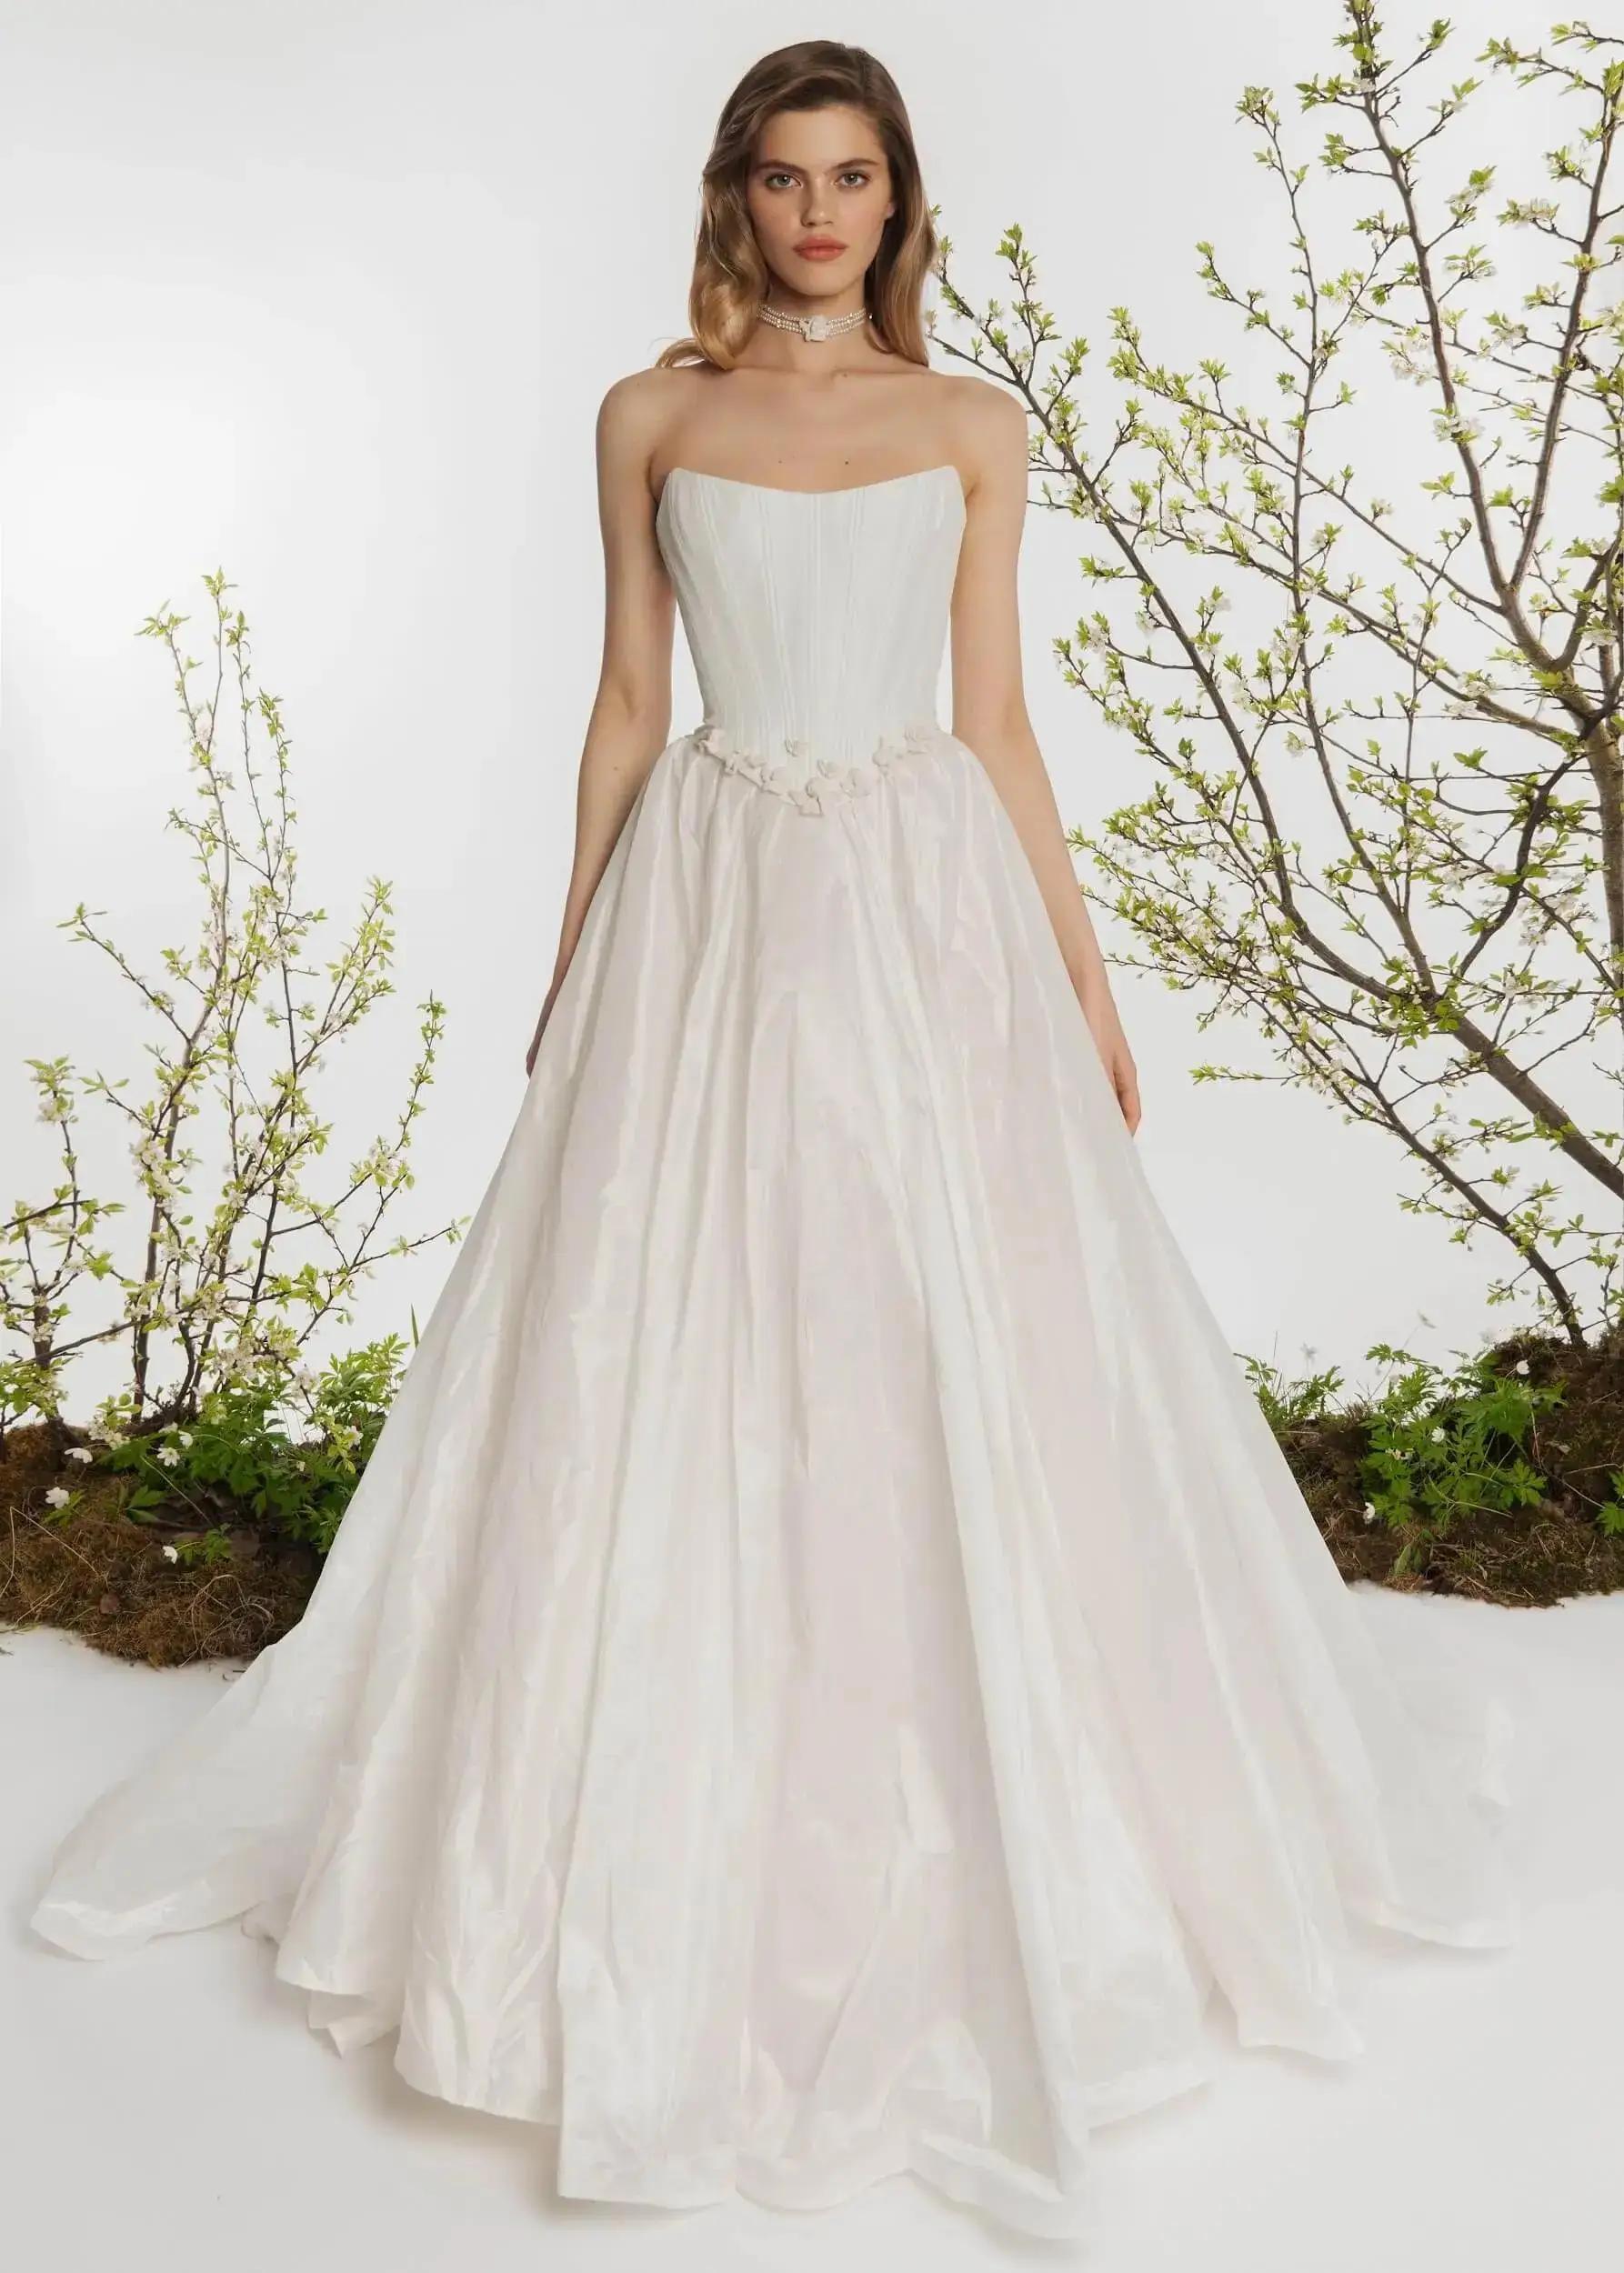 Model in Ange Etoiles wedding dress